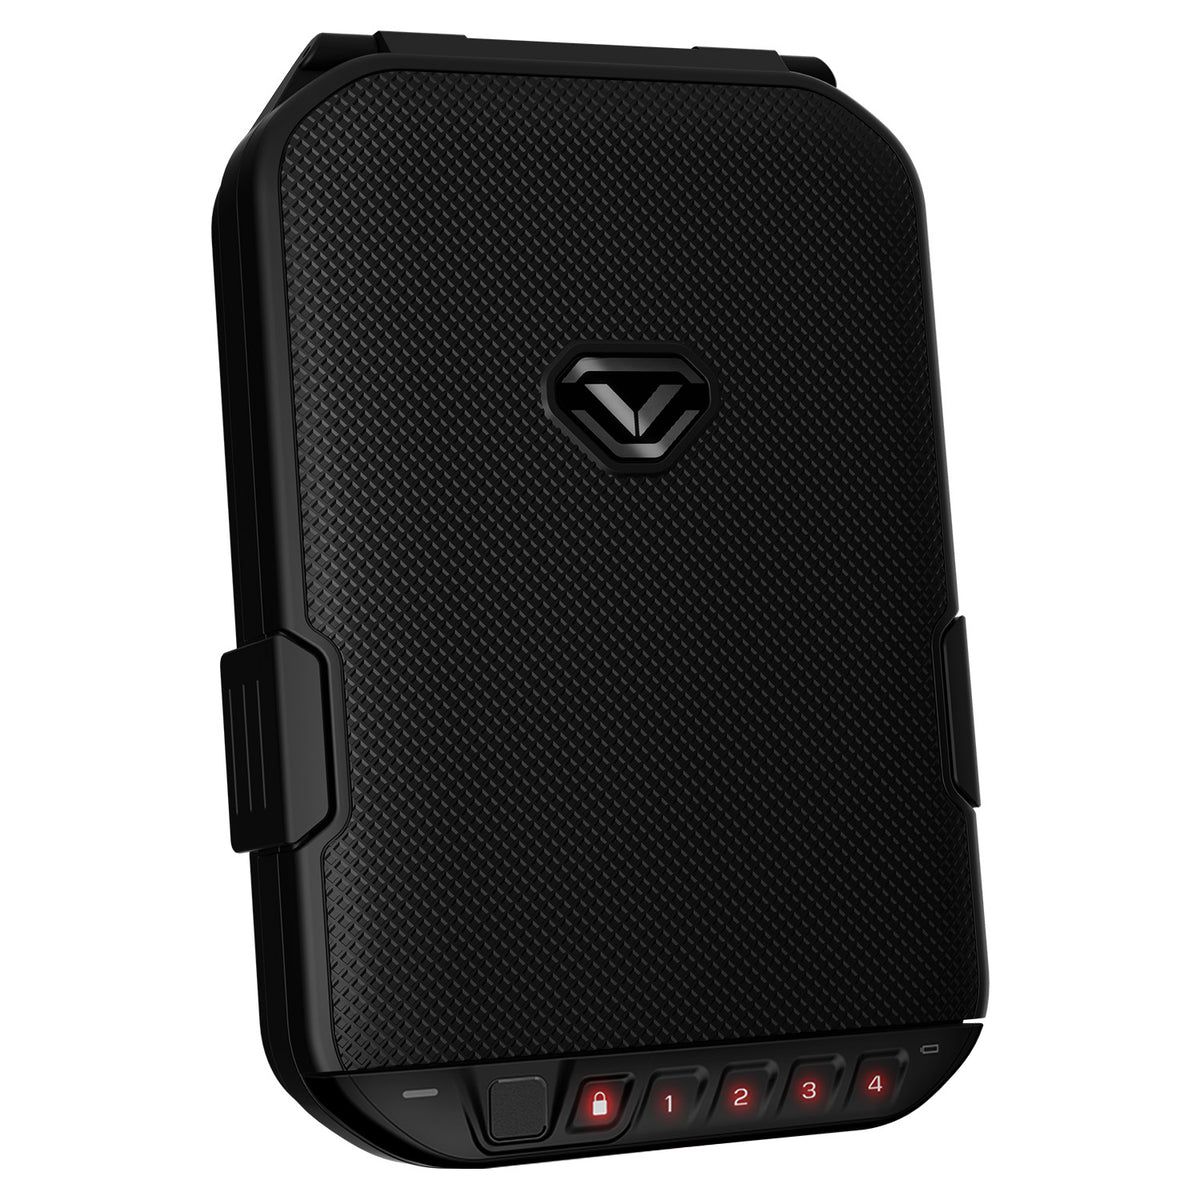 Vaultek - lifepod 1.0 secure weather resistant biometric and keypad gun safe with built-in lock system -  Covert Black - MODLOCK